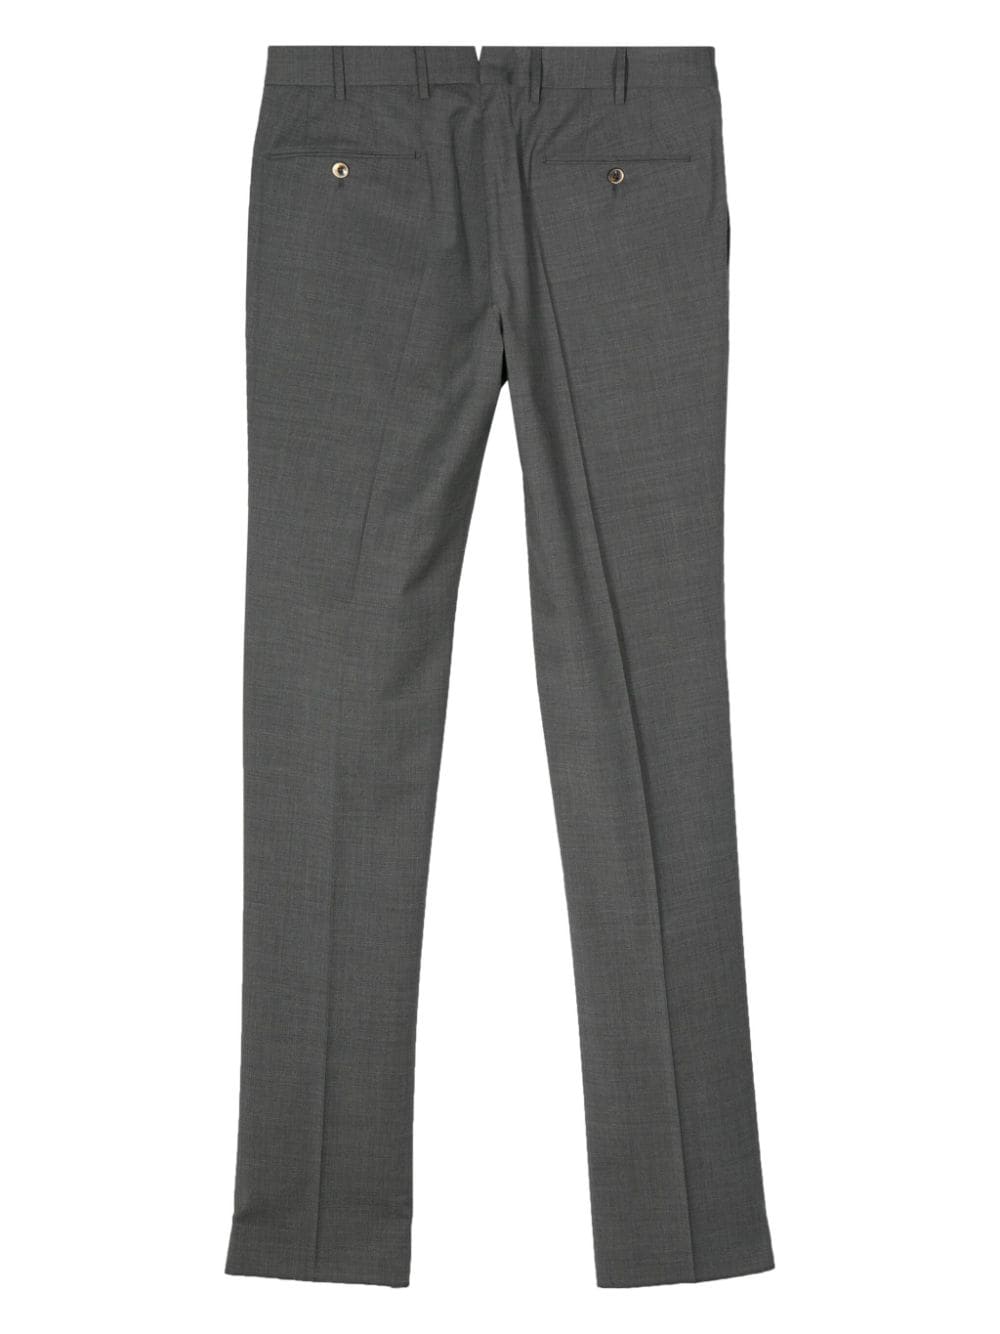 PT Torino mélange tailored trousers - Grijs